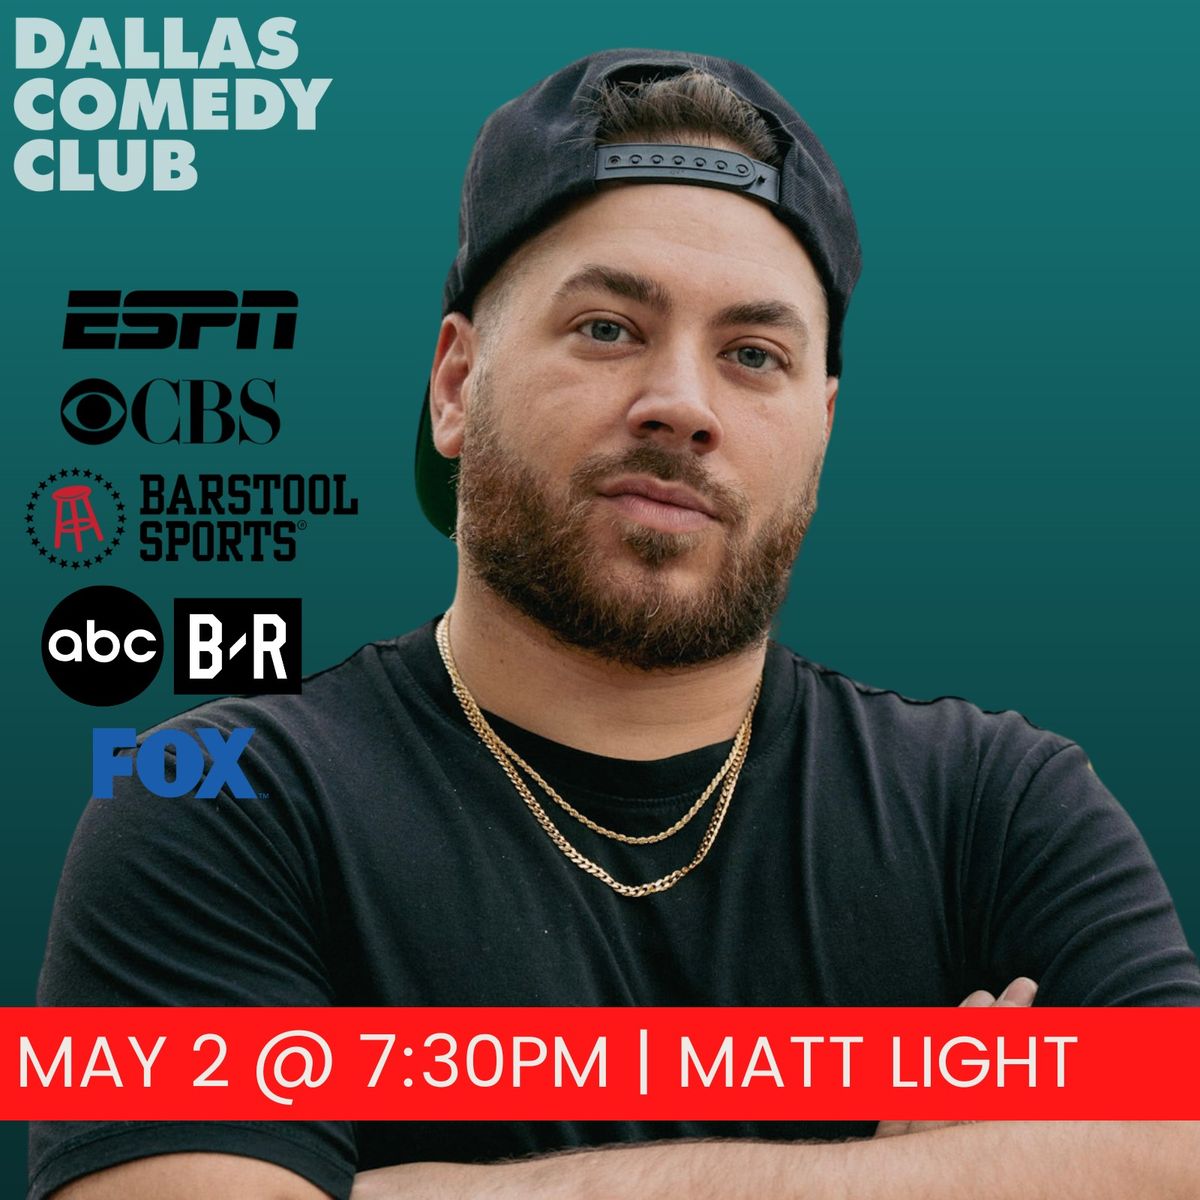 Dallas Comedy Club Presents: Matt Light